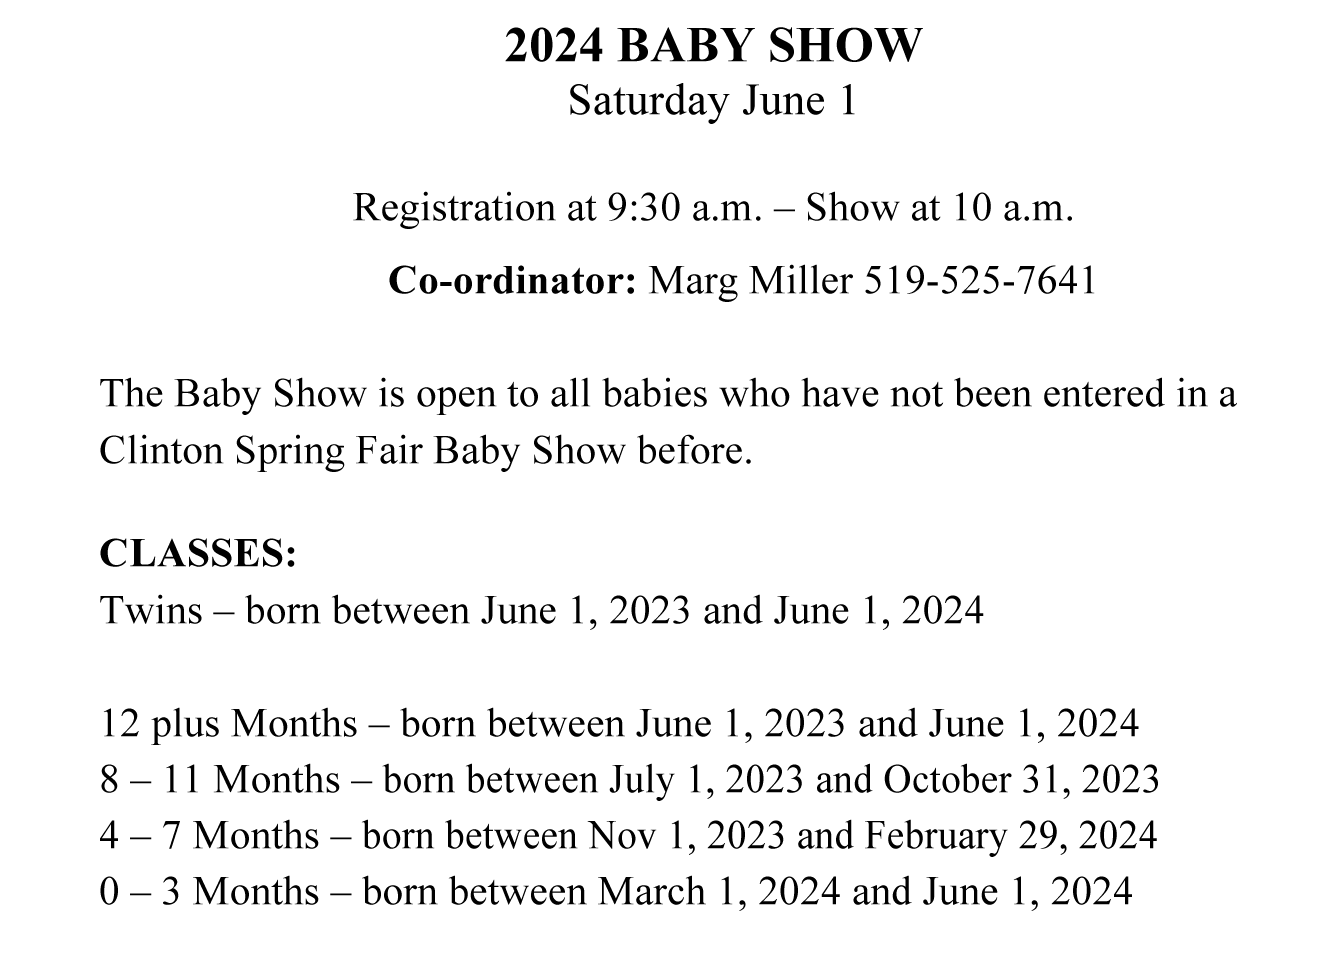 Baby show 2024